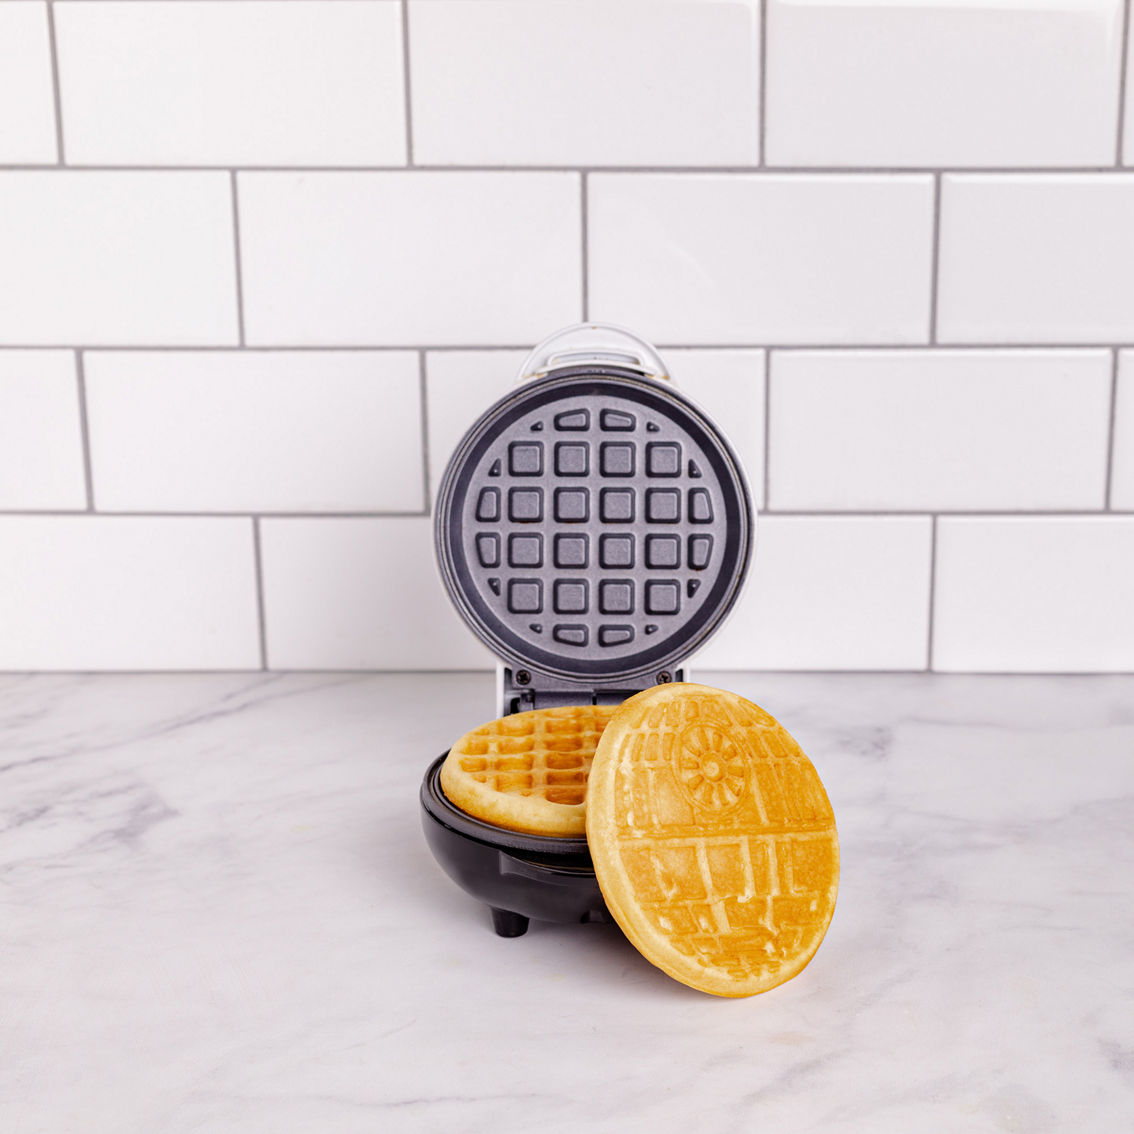 Uncanny Brands Star Wars Death Star Mini Waffle Maker - Image 5 of 8